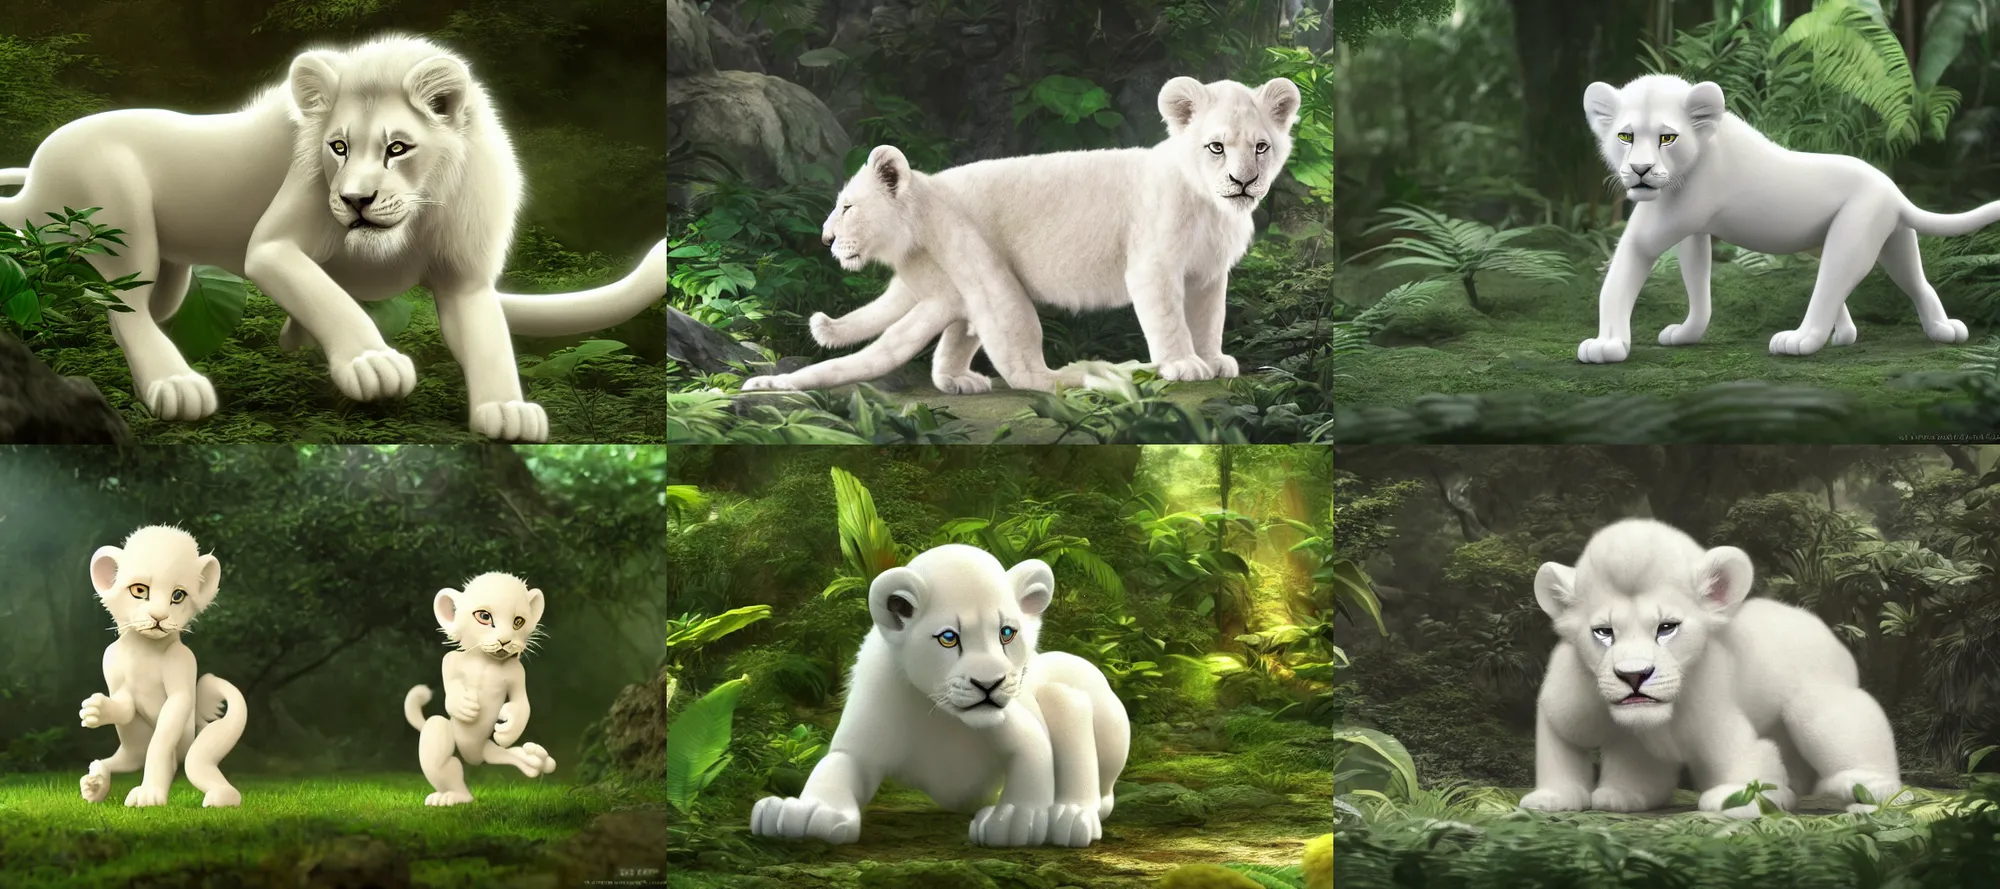 Prompt: a small white lion cub playing in the jungle, art by ozamu tezuka, leiji matsumoto, tezuka osamu, go nagai, photorealistic 8 k, cinematic lighting, hd, high detail, atmospheric, trending on artstation